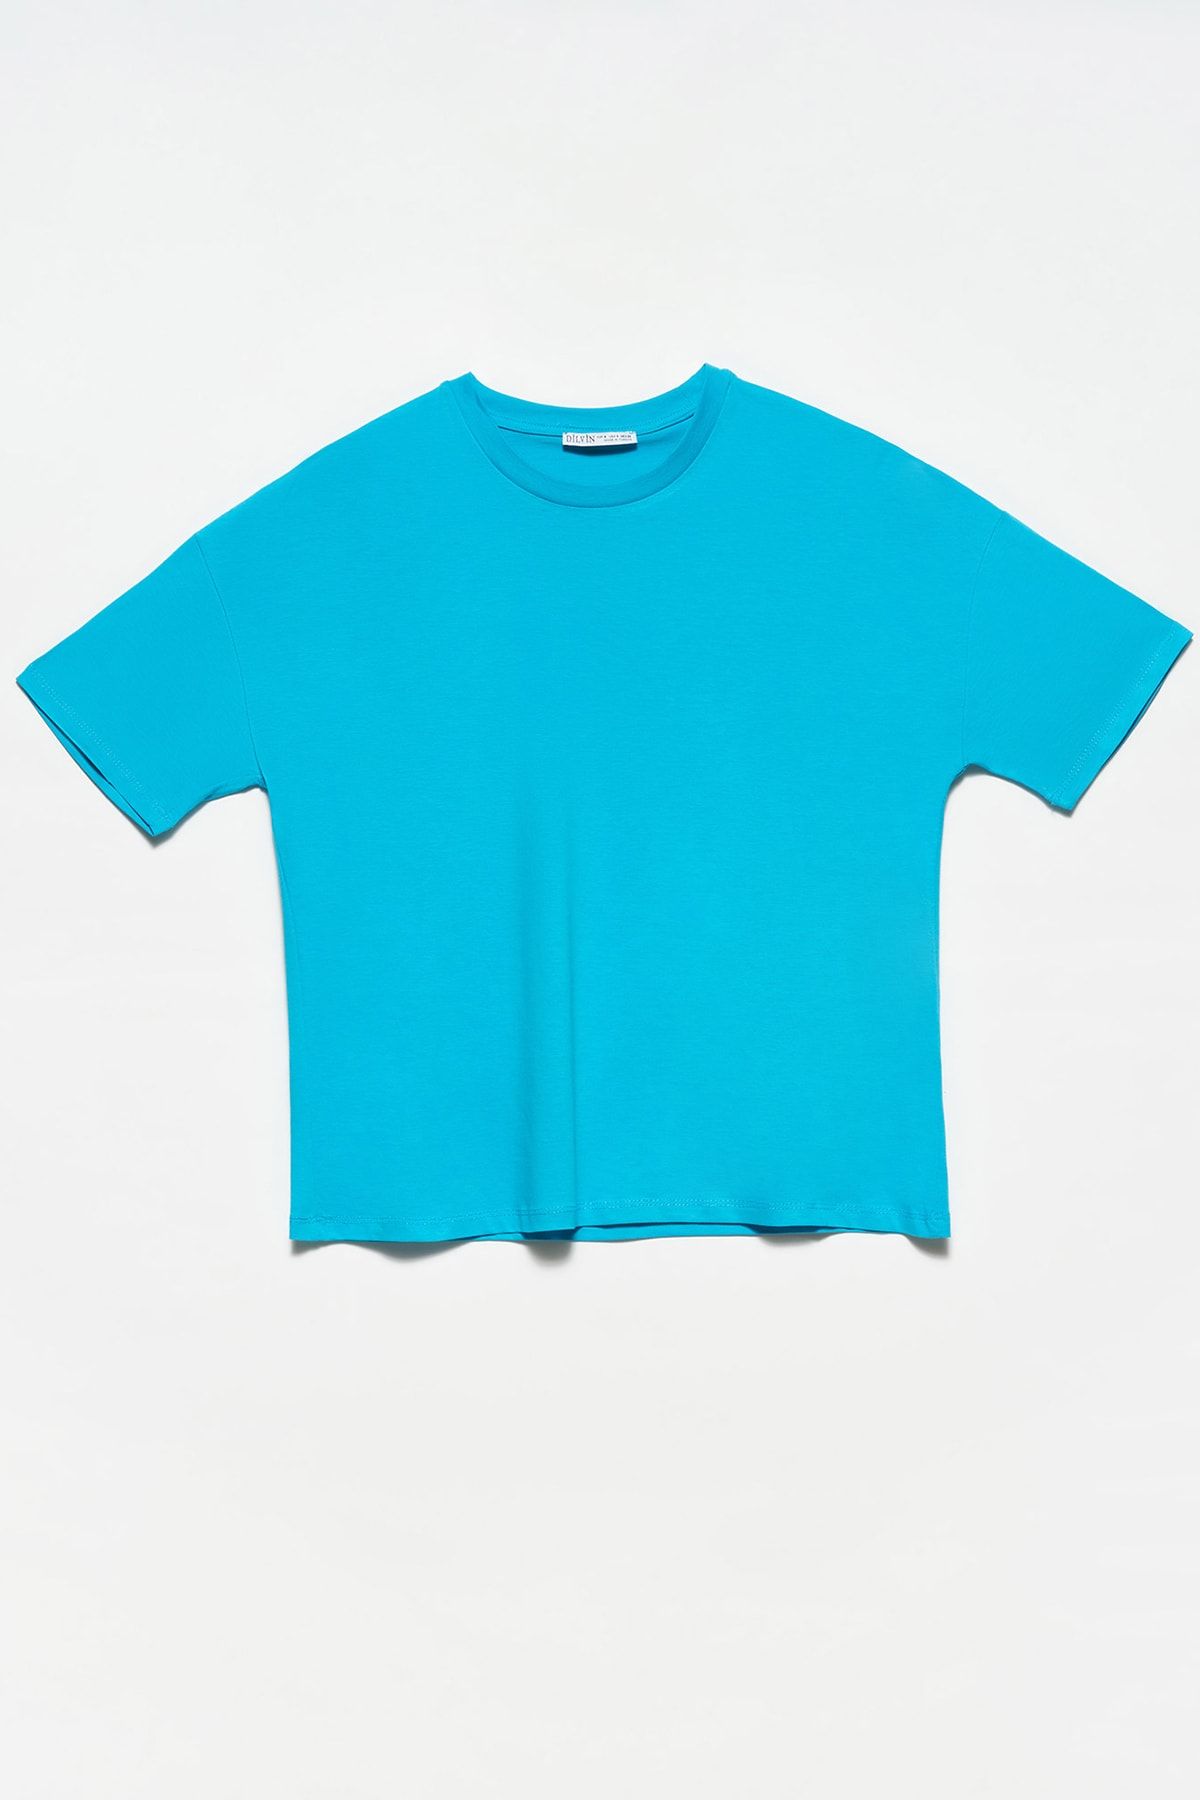 Dilvin 3683 Basic T-shirt-turkuaz